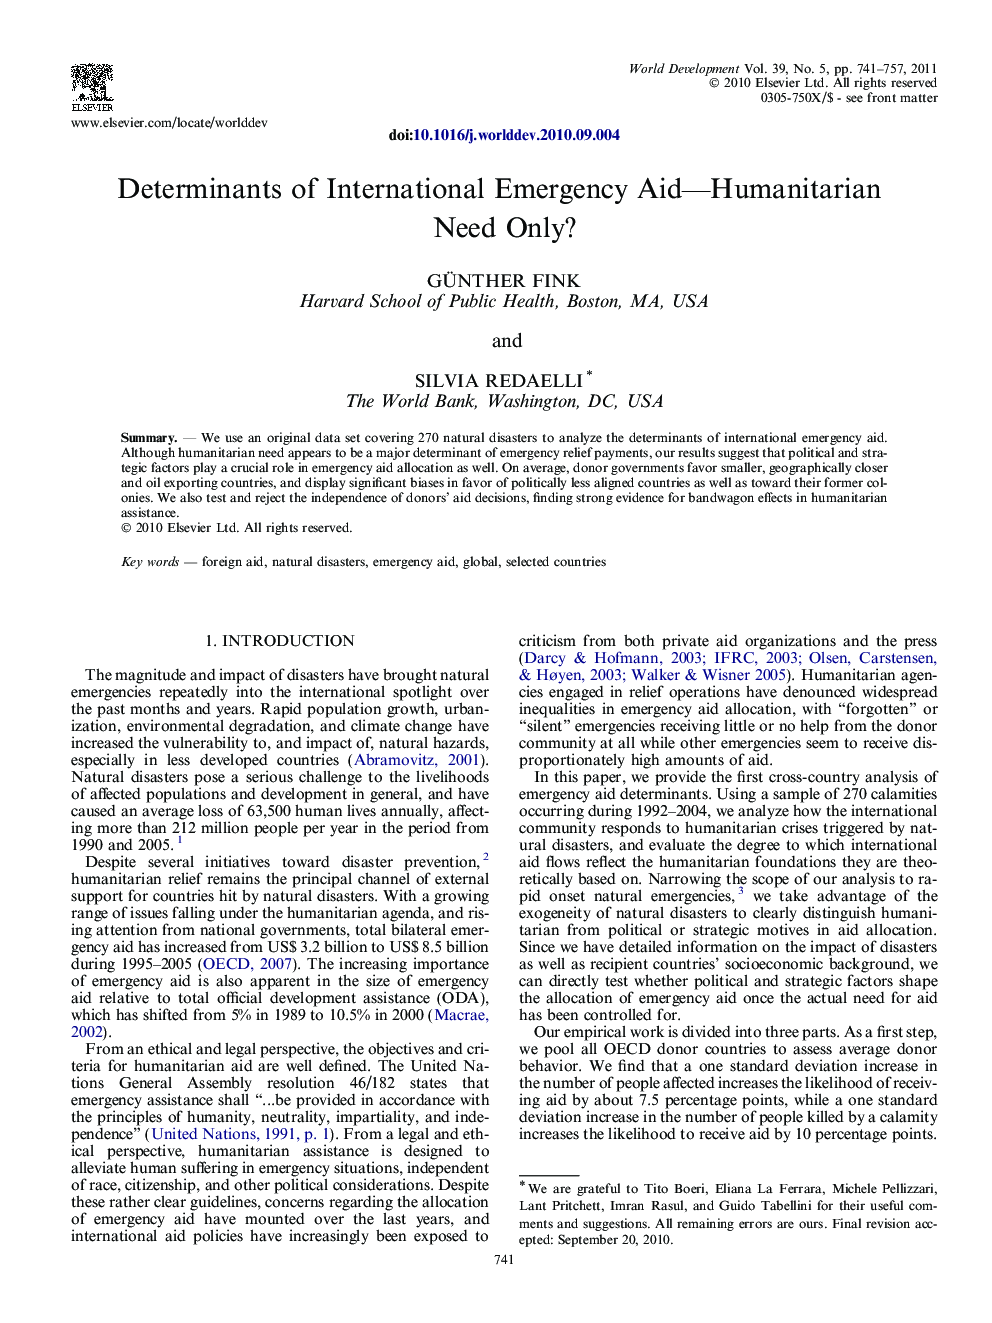 Determinants of International Emergency Aid—Humanitarian Need Only?